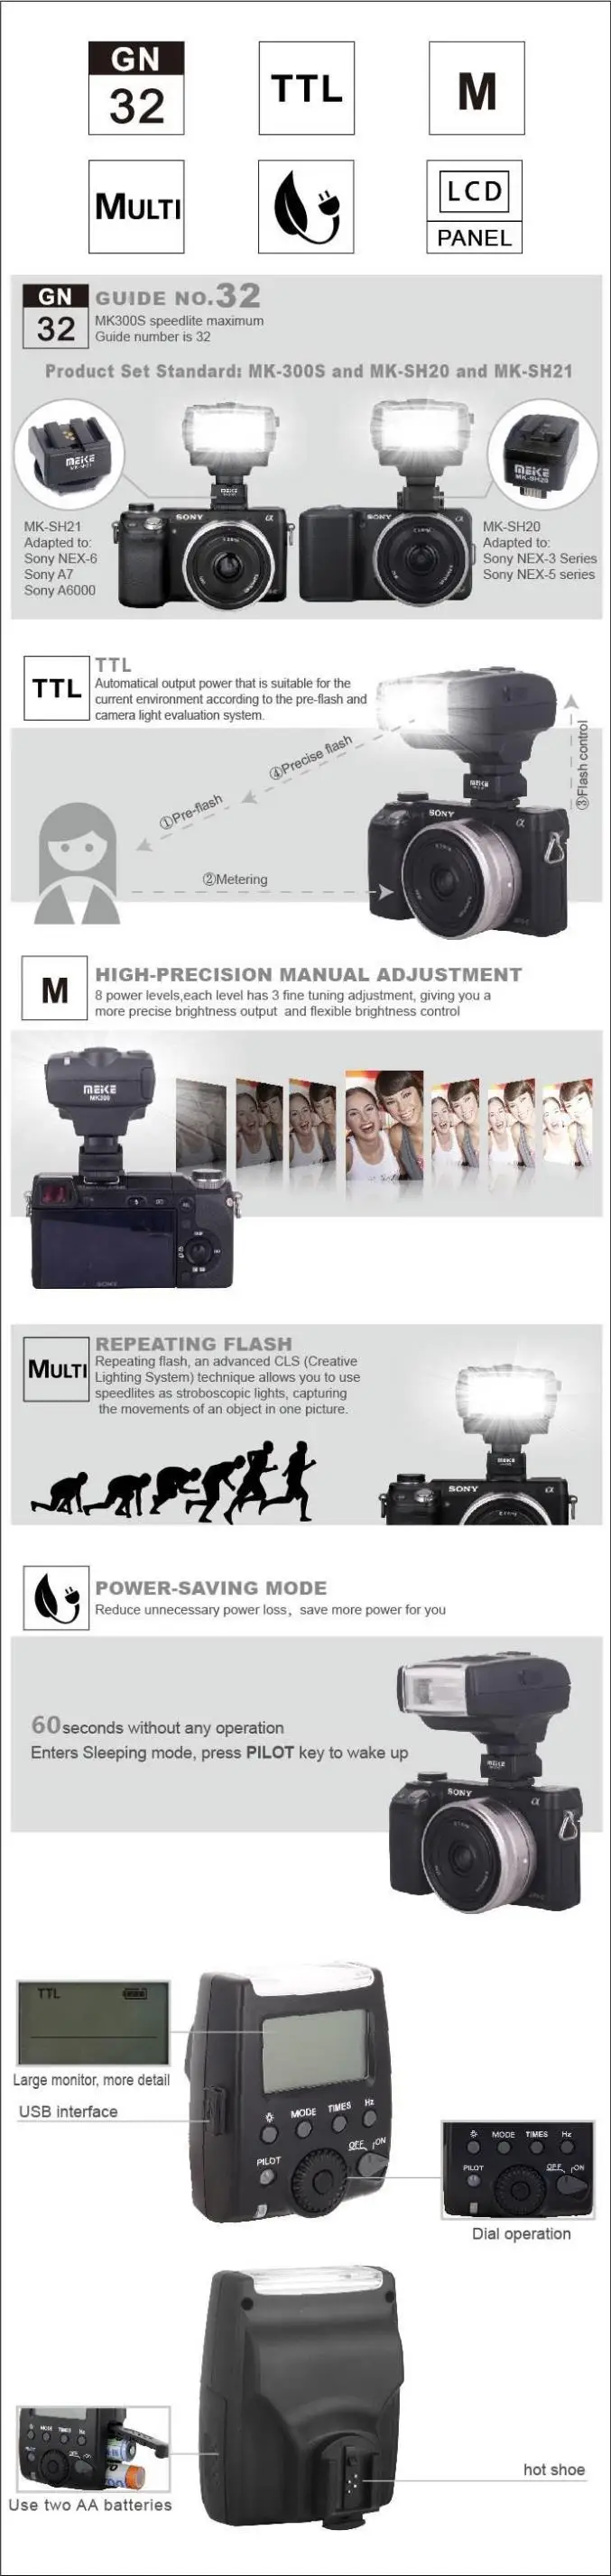 Meike MK300S Вспышка Speedlite для sony Альфа A33 A35 A37 A55 A57 A58 A77 a200 a300 a550 a580 a700 A850 A900 цифрового однообъективного зеркального фотоаппарата